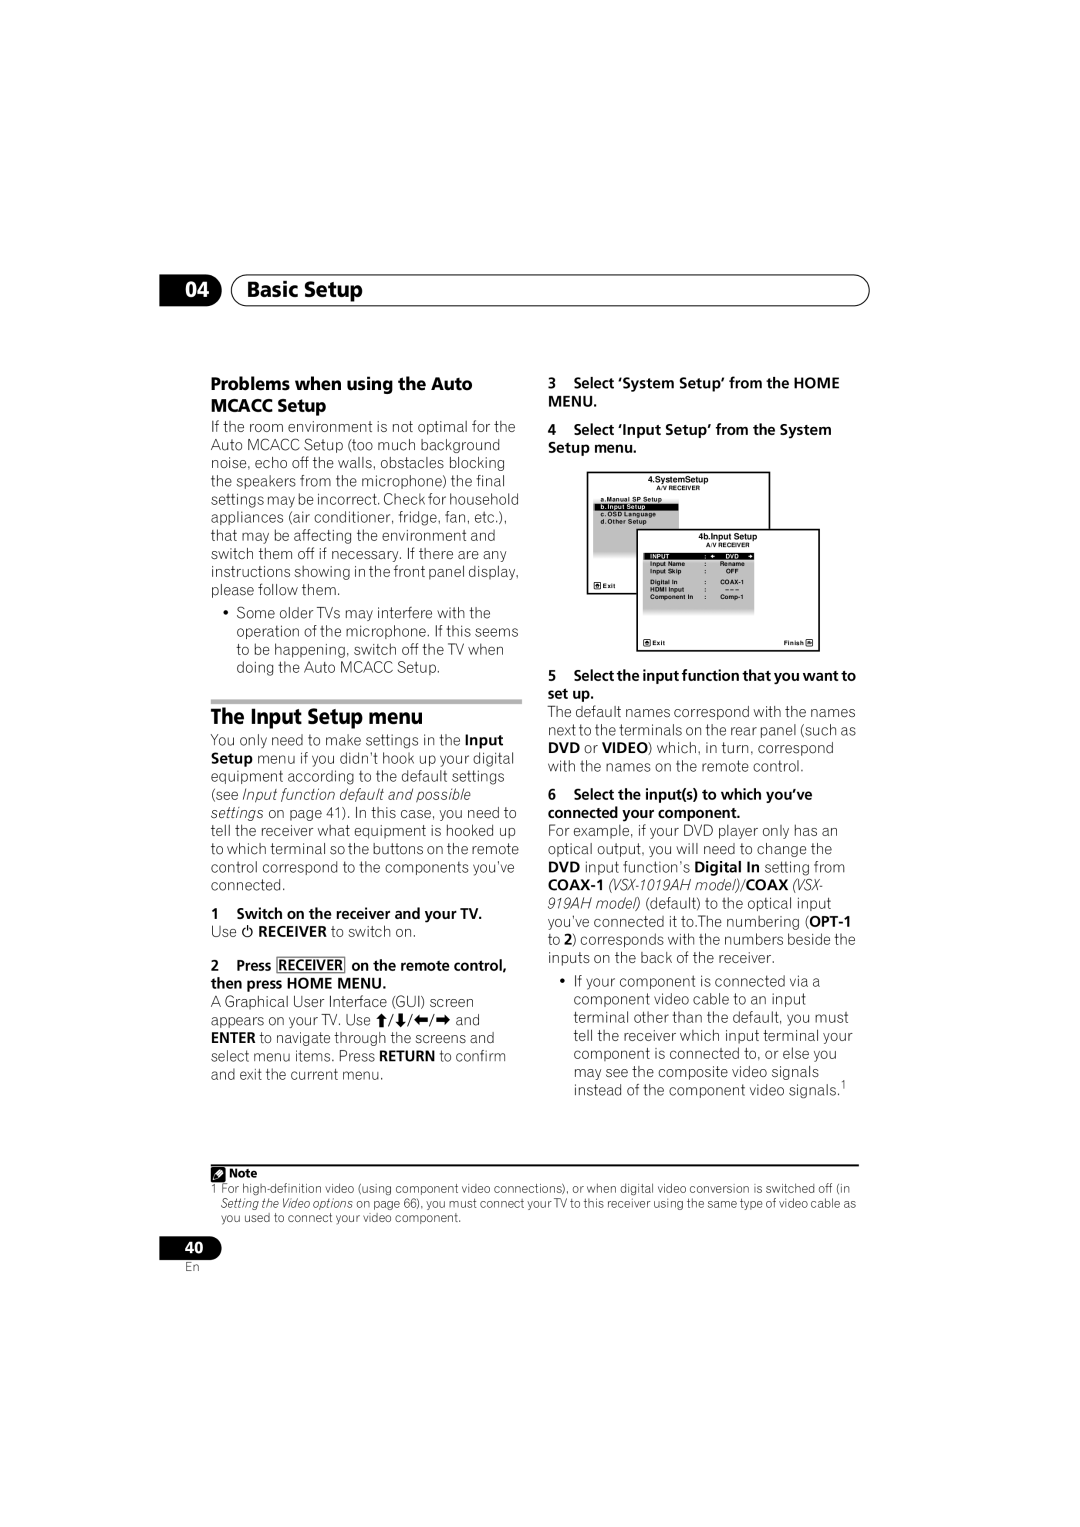 Pioneer VSX-919AH-S manual The Input Setup menu, Problems when using the Auto MCACC Setup, 04Basic Setup 